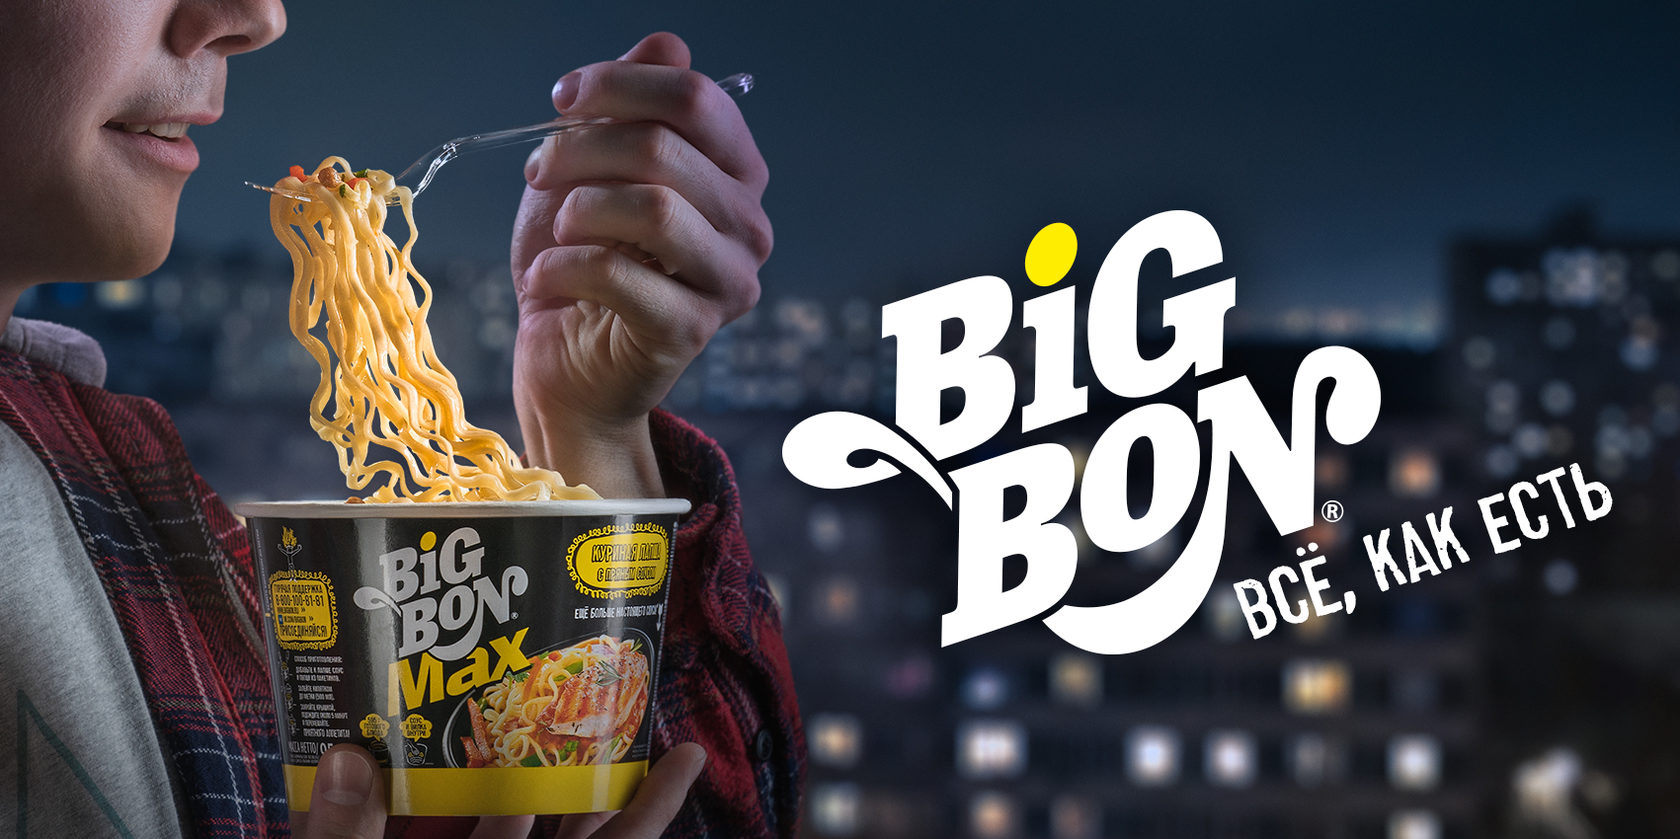 Big now mine. Биг Бон. Биг Бон реклама. Лапша быстрого приготовления Биг Бон реклама. BIGBON логотип.